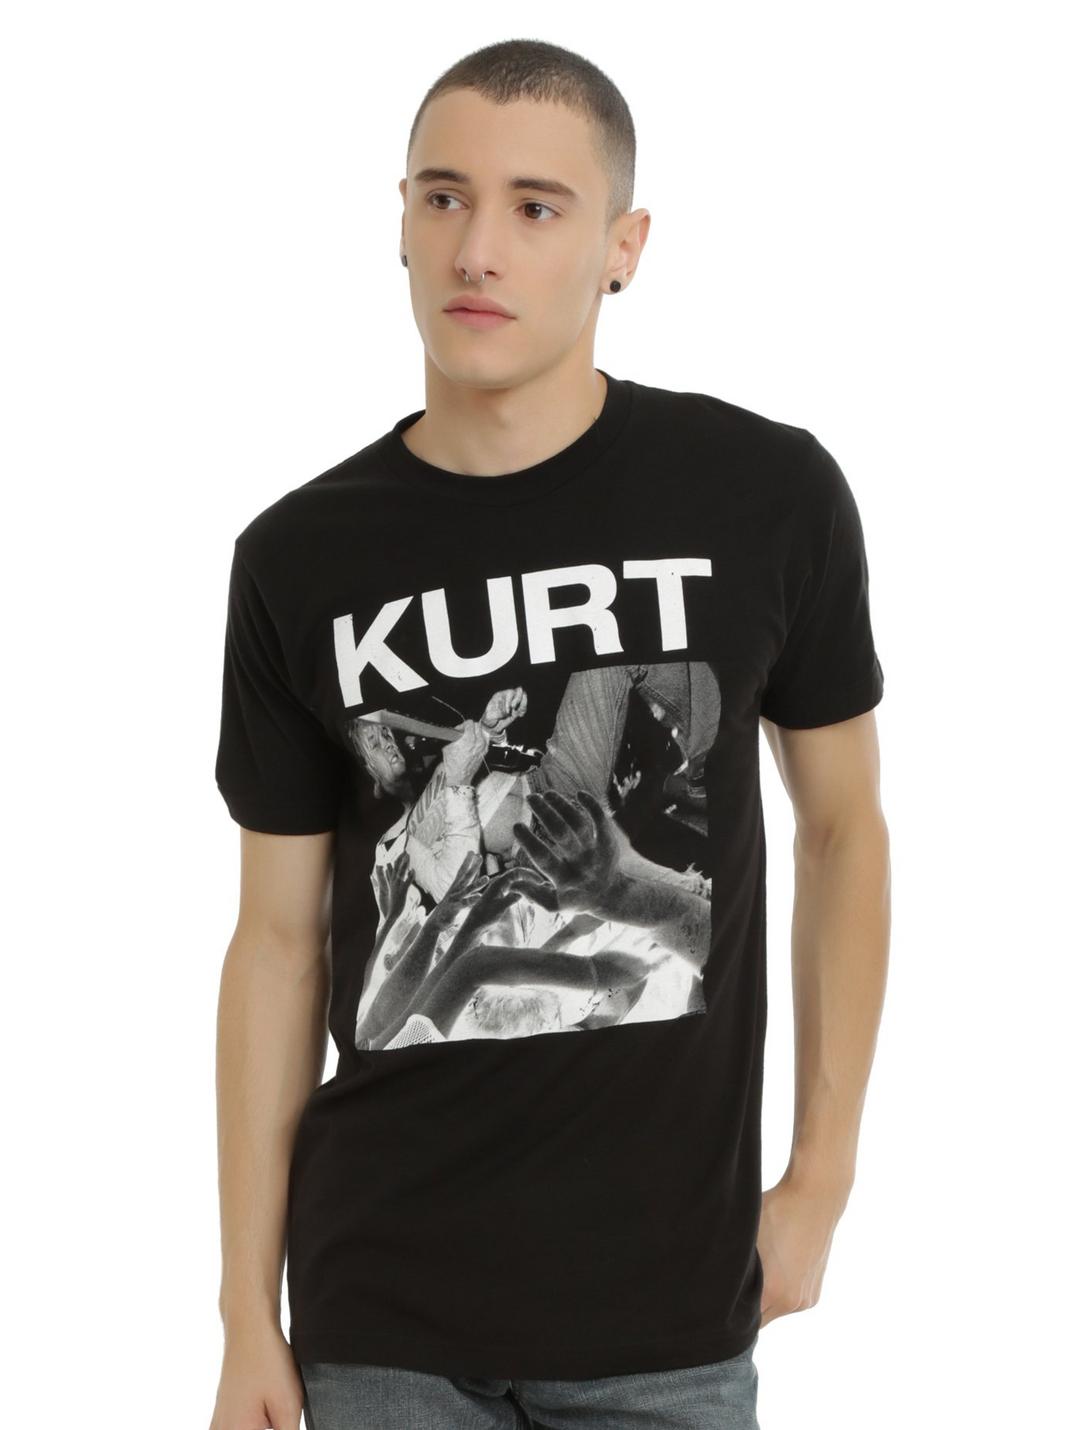 Kurt Cobain Crowd Surfing T-Shirt | Hot Topic